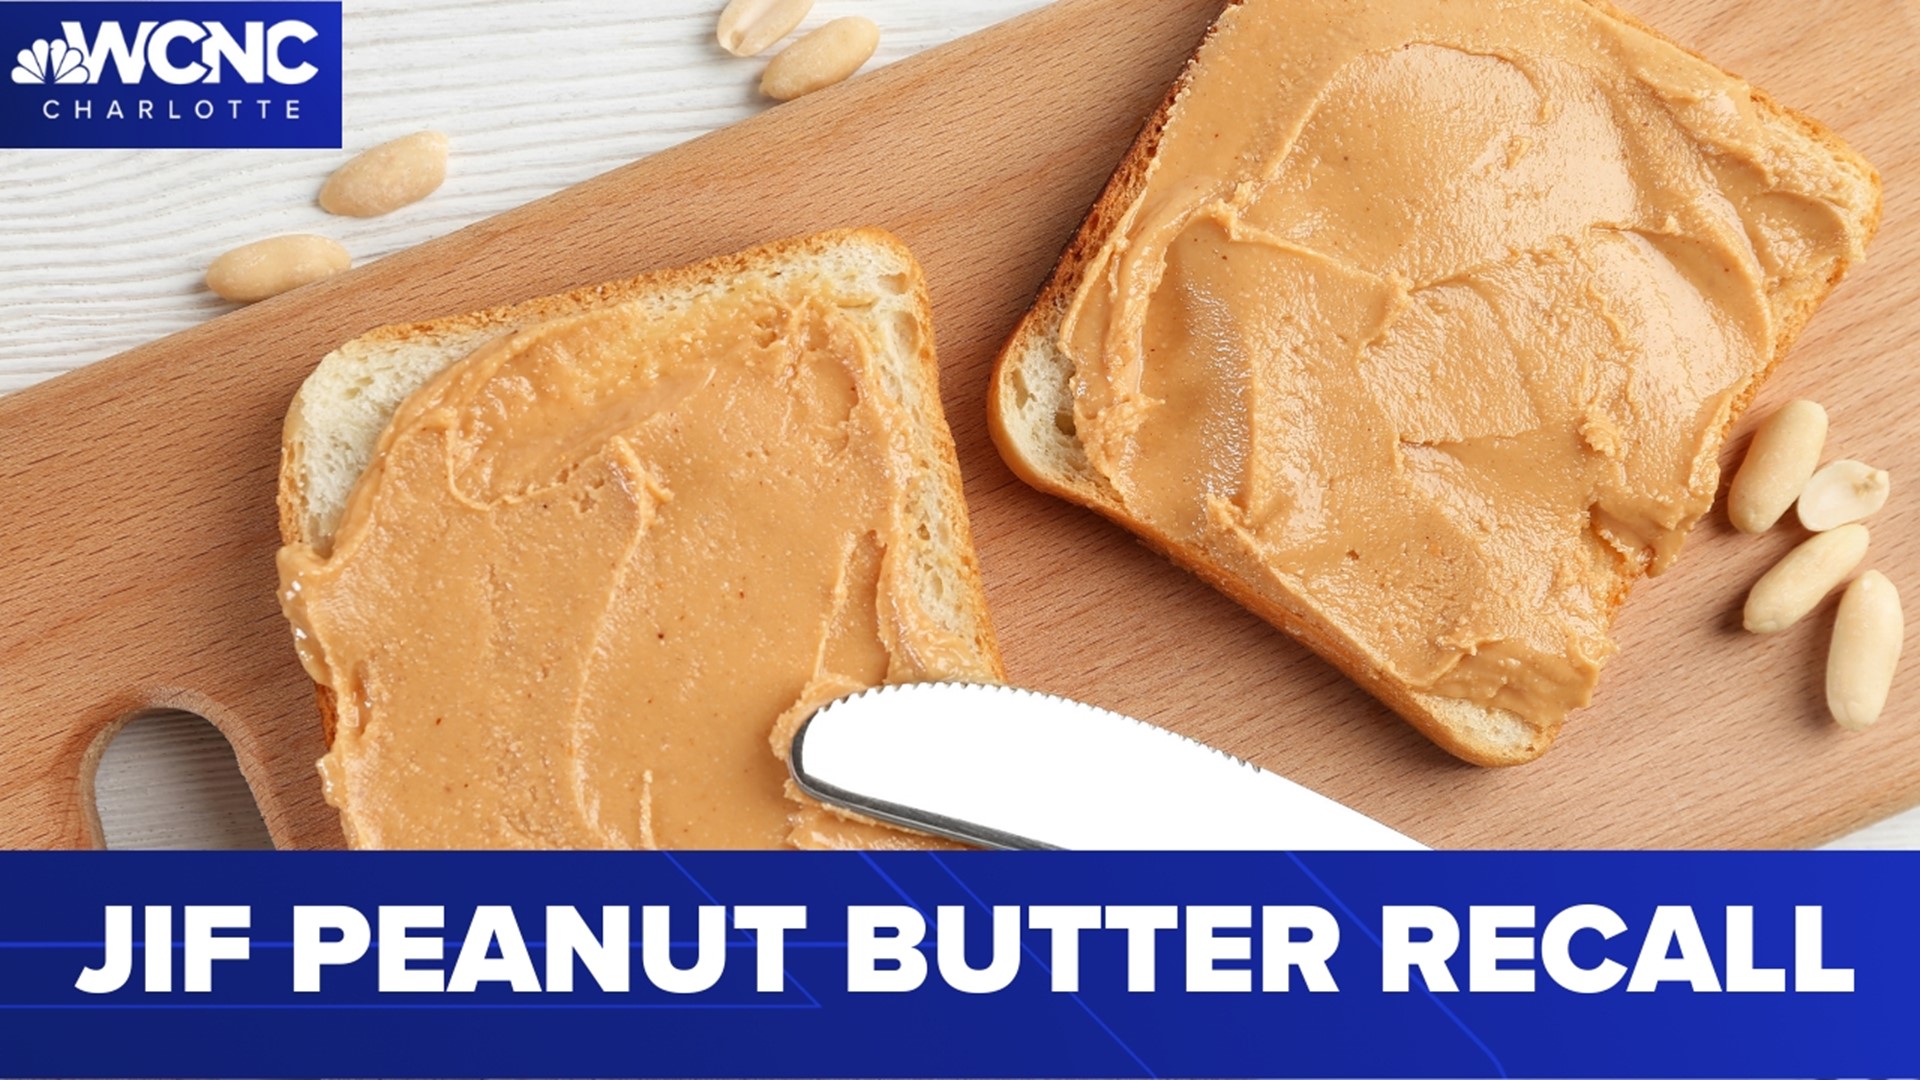 J.M. Smucker Jif peanut butter recall over salmonella concerns